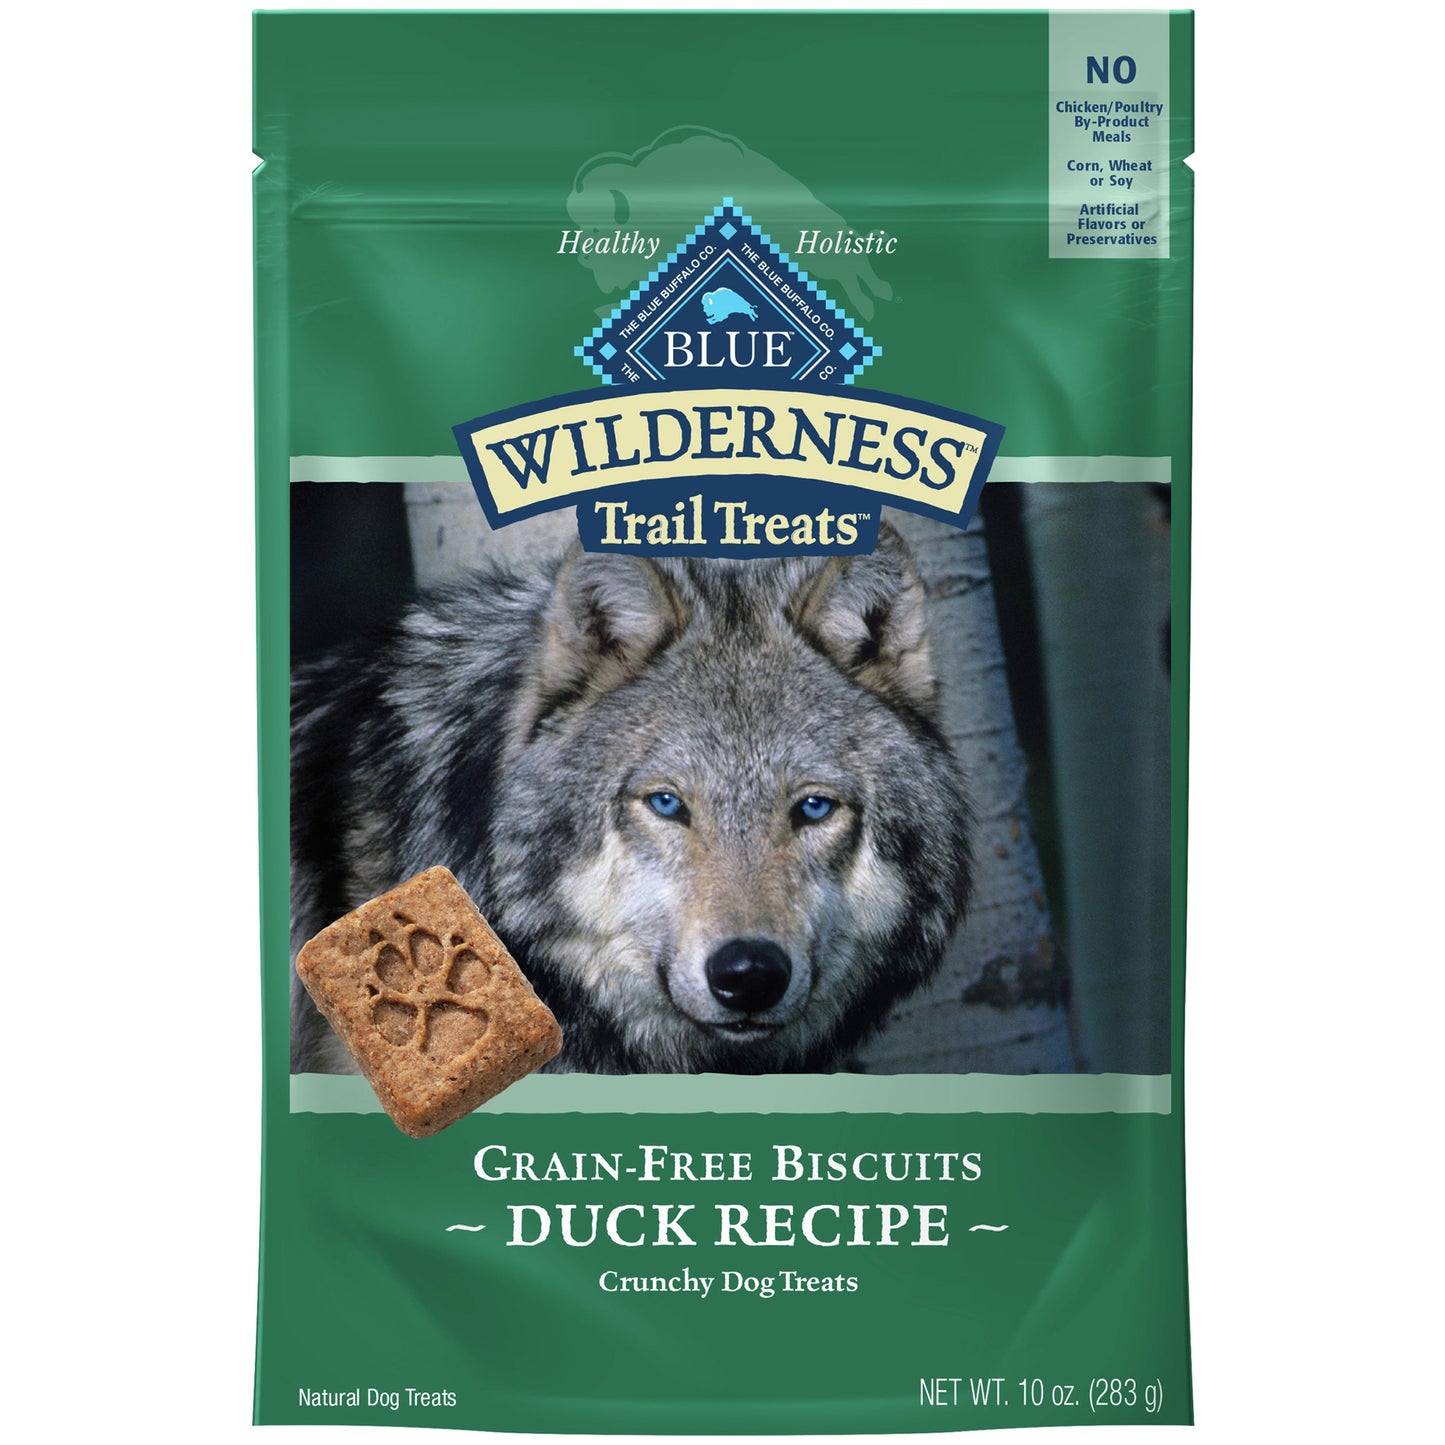 Blue Buffalo Wilderness Trail Treats High Protein Grain Free Crunchy Dog Treats Biscuits, Duck Recipe, 10-oz Bag